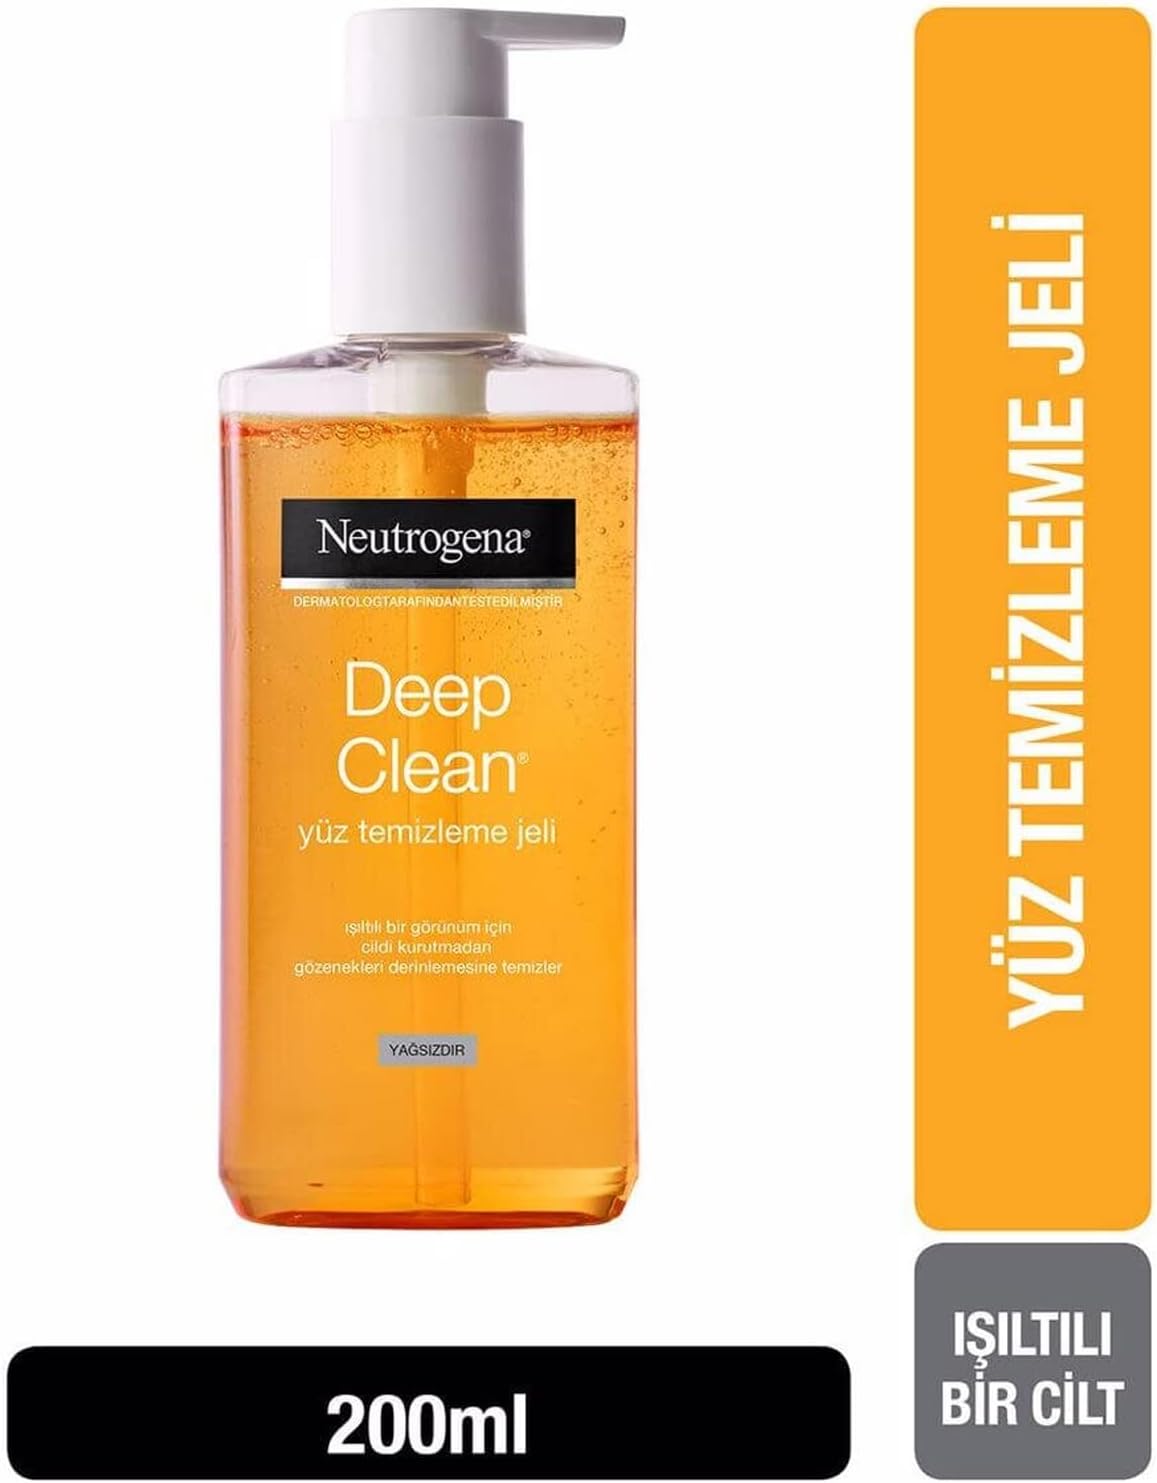 Neutrogena Face Wash, Deep Clean, Gel, 200ml